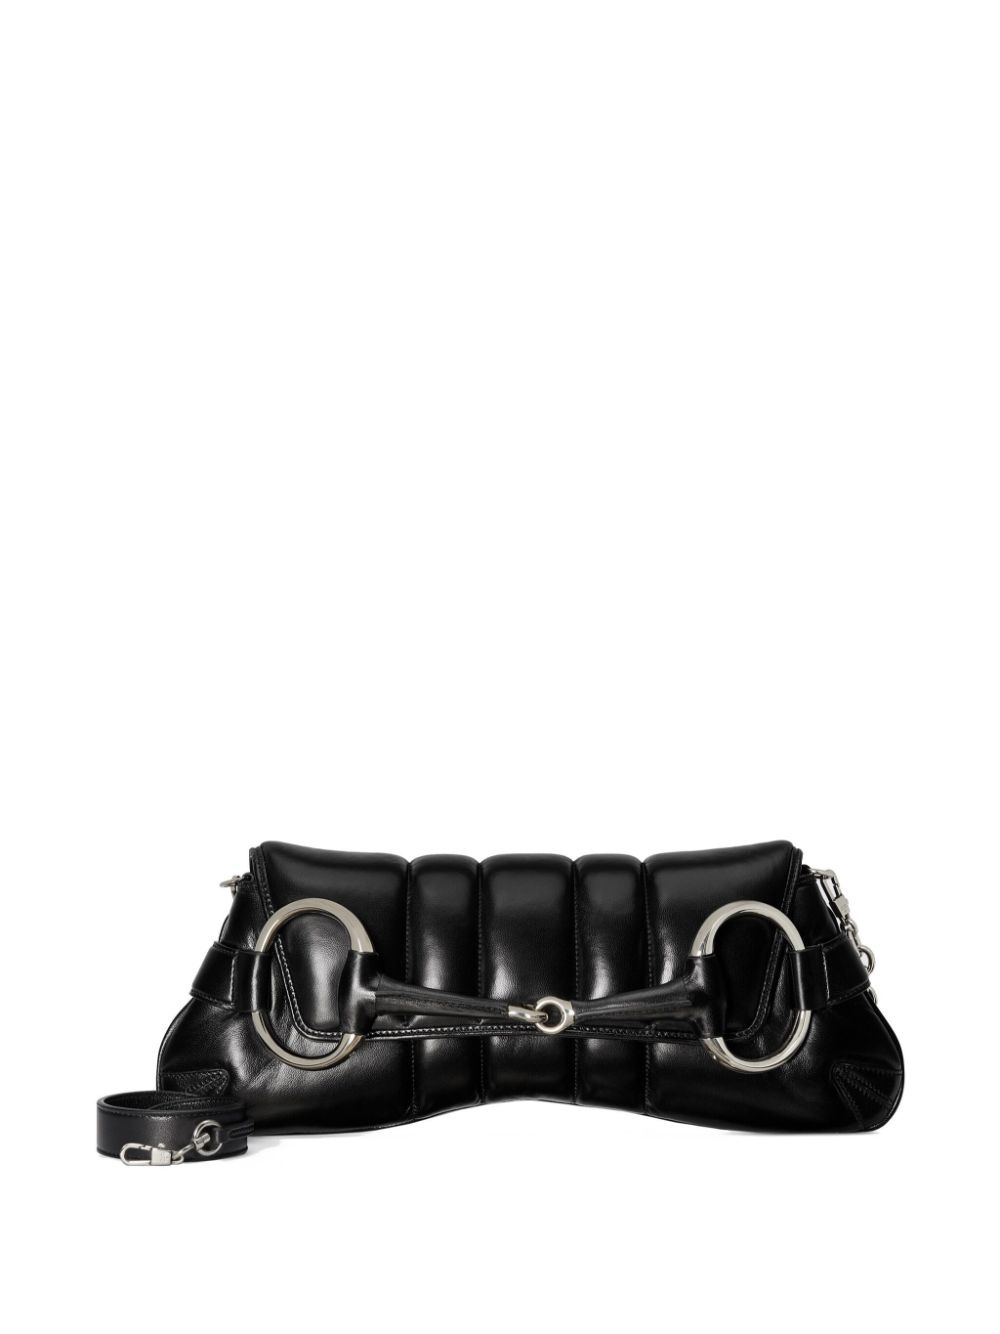 Horsebi chain medium leather shoulder bag - 5